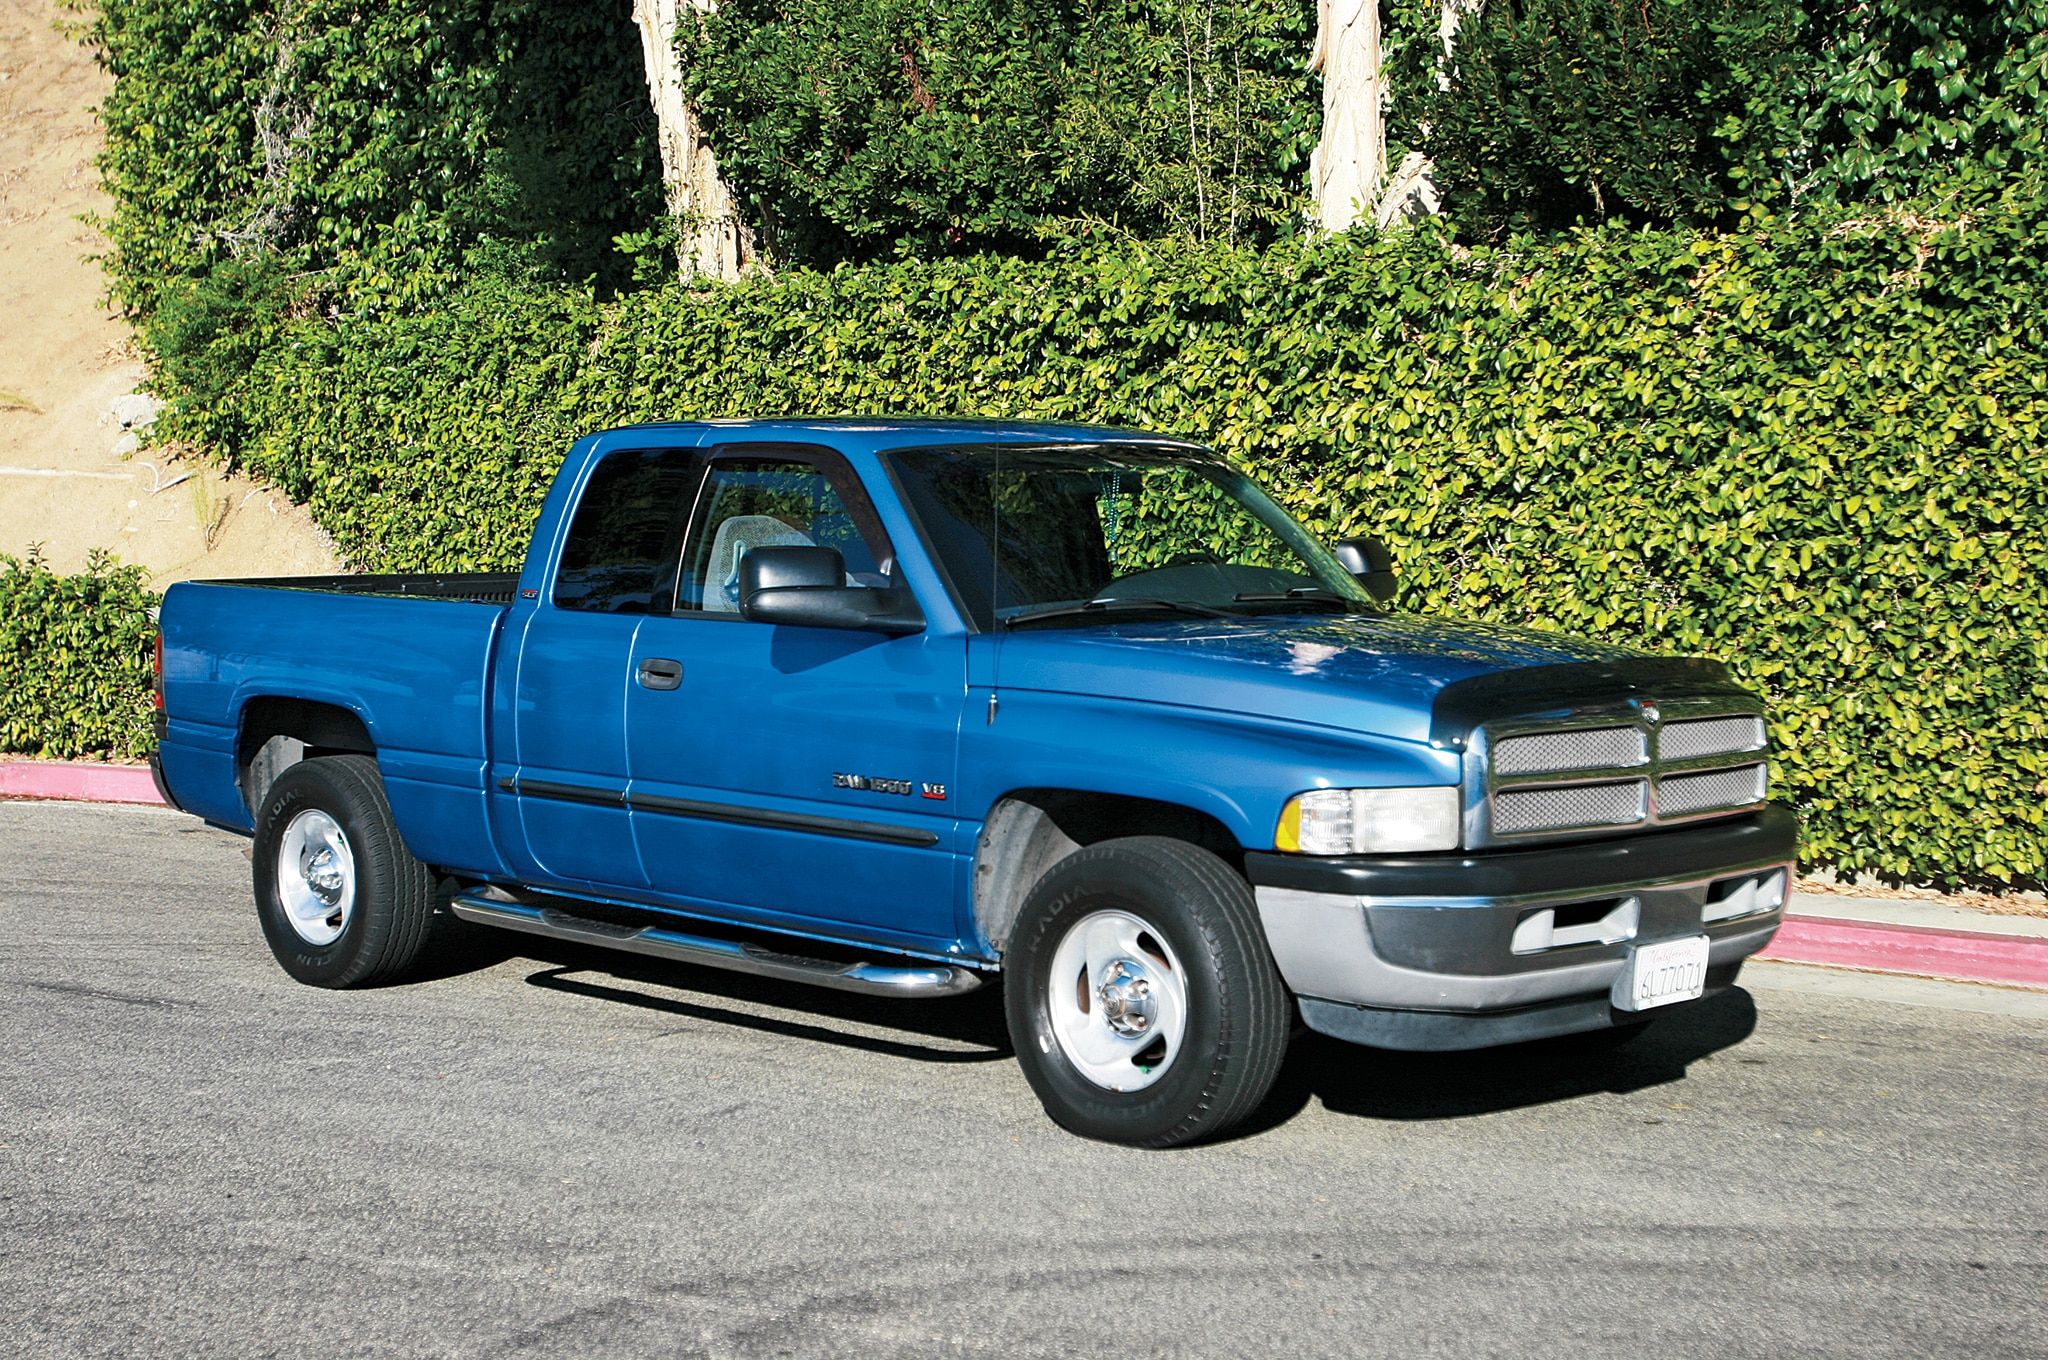 2003 Dodge Ram 1500-4wd-quad-cab-long-wheelbase SLT 0-60 Times, Top 2003 Dodge Ram 1500 Hemi 0 60